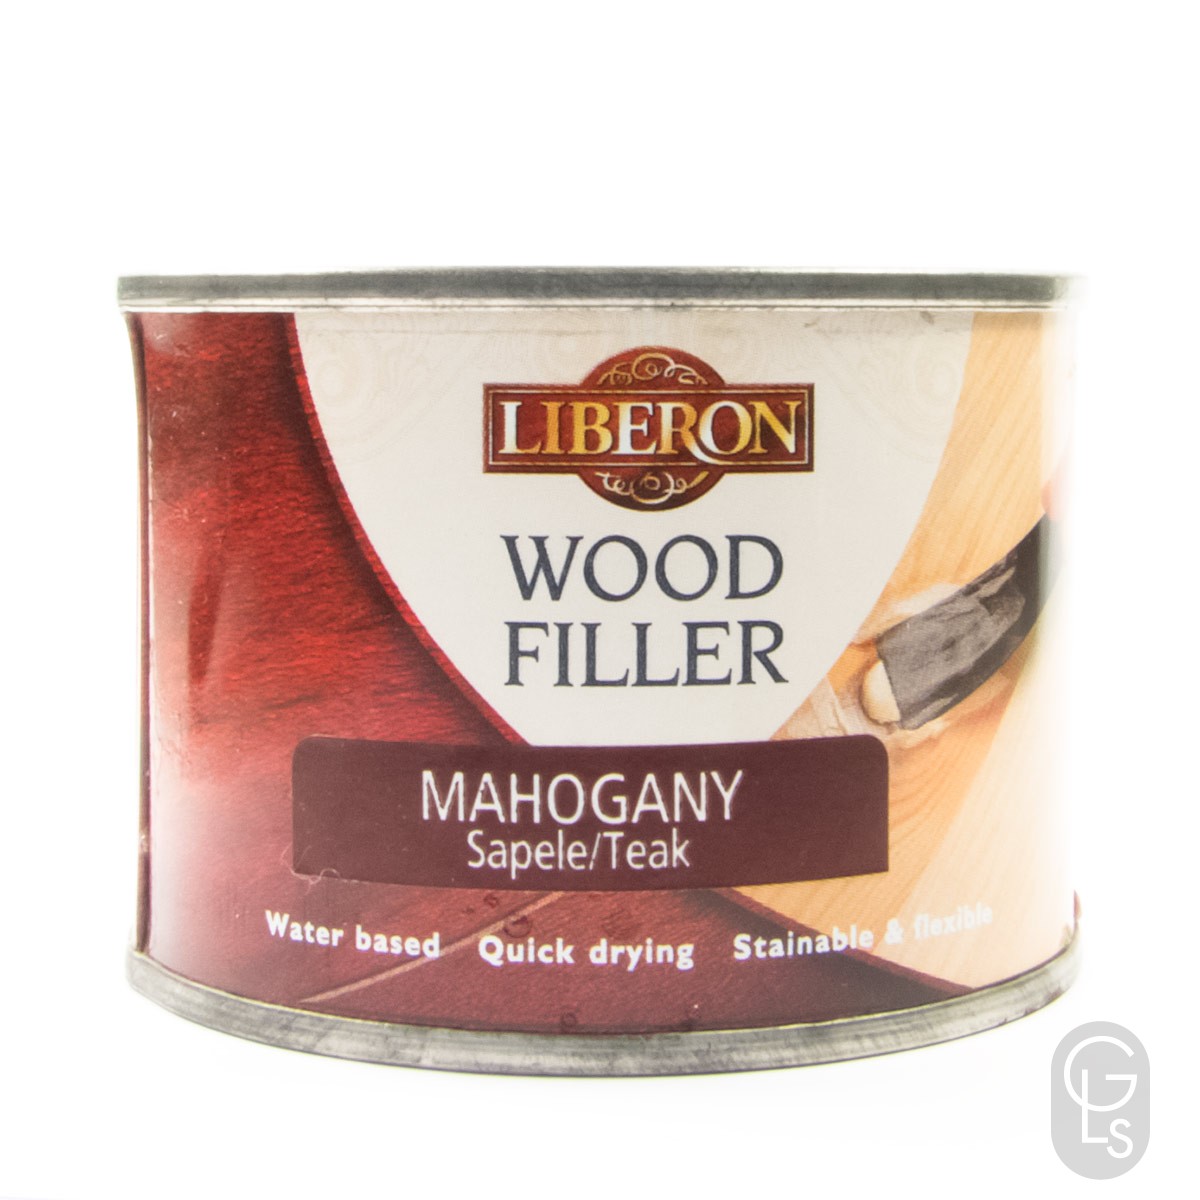 Liberon Wood Filler - Mahogany